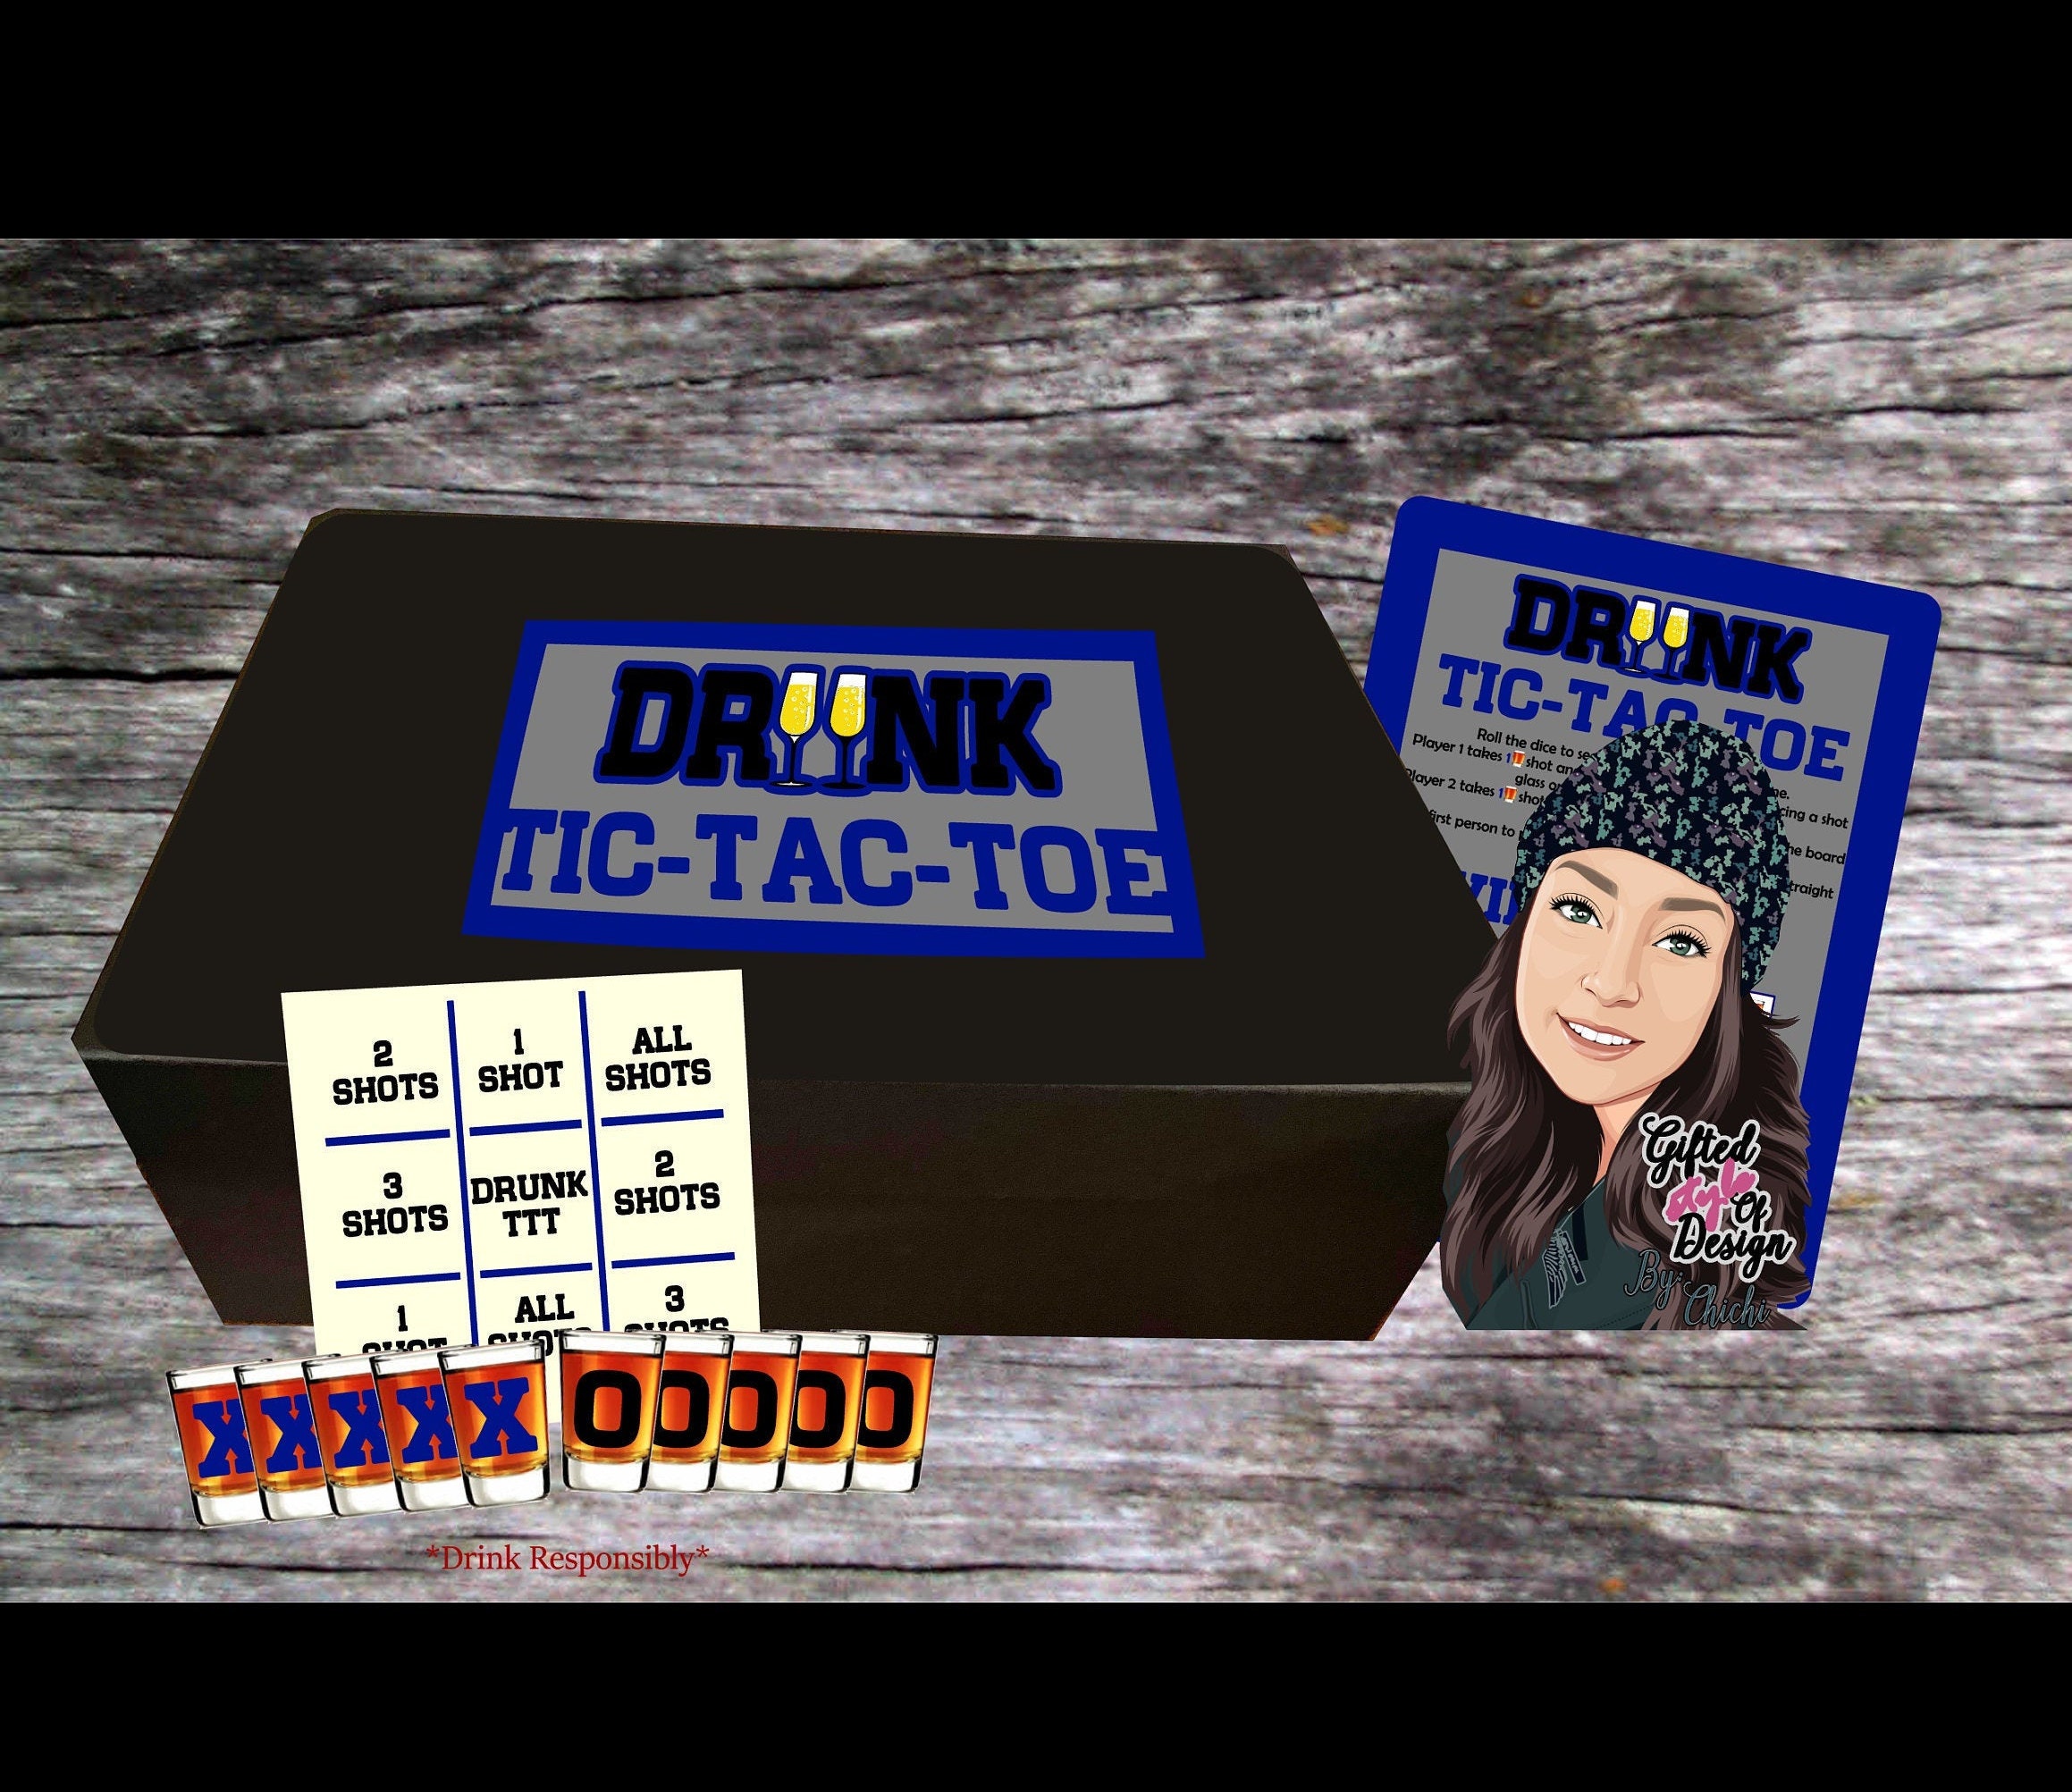 Drunken Tic Tac Toe Rules Printable Tic Tac Toe Rules 